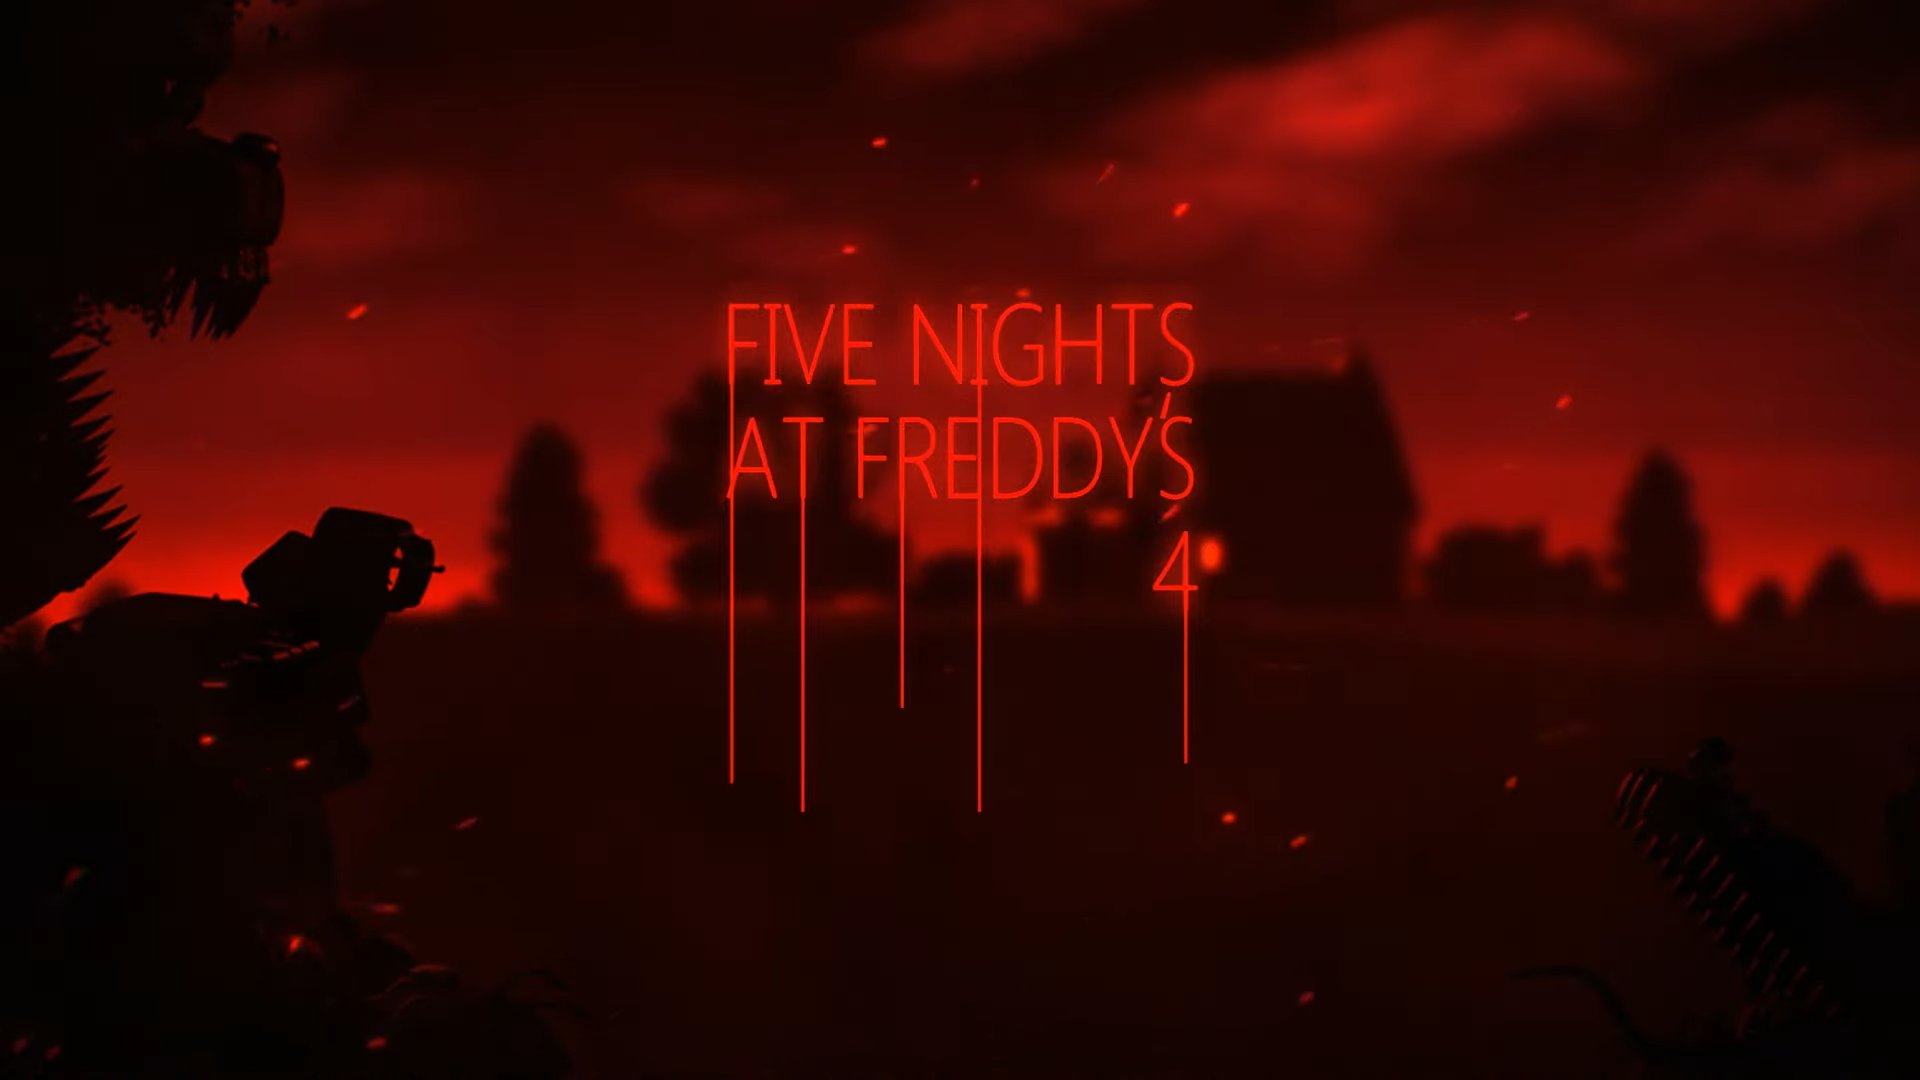 HD wallpaper: Five Nights at Freddy's, Five Nights at Freddy's 4